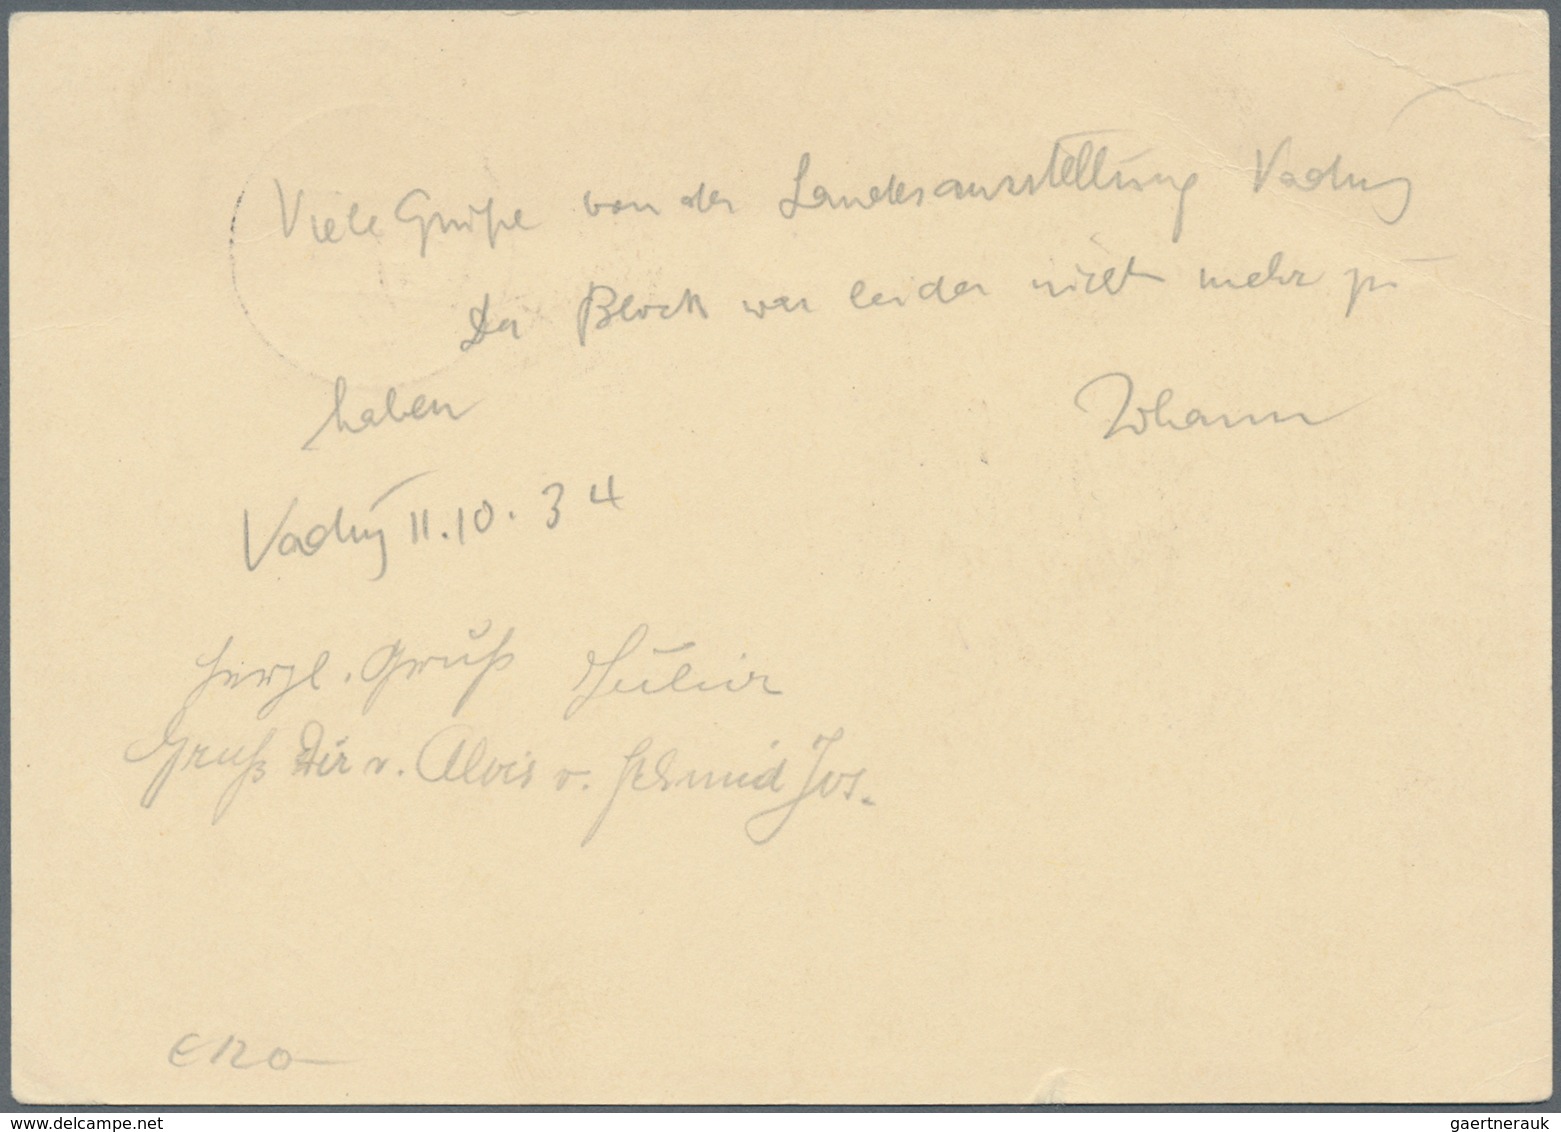 Liechtenstein - Ganzsachen: 1934, 20 Rp. Schloßhof,Bild Masescha, Bedarfskarte Mit LIBA-Ausstellungs - Interi Postali